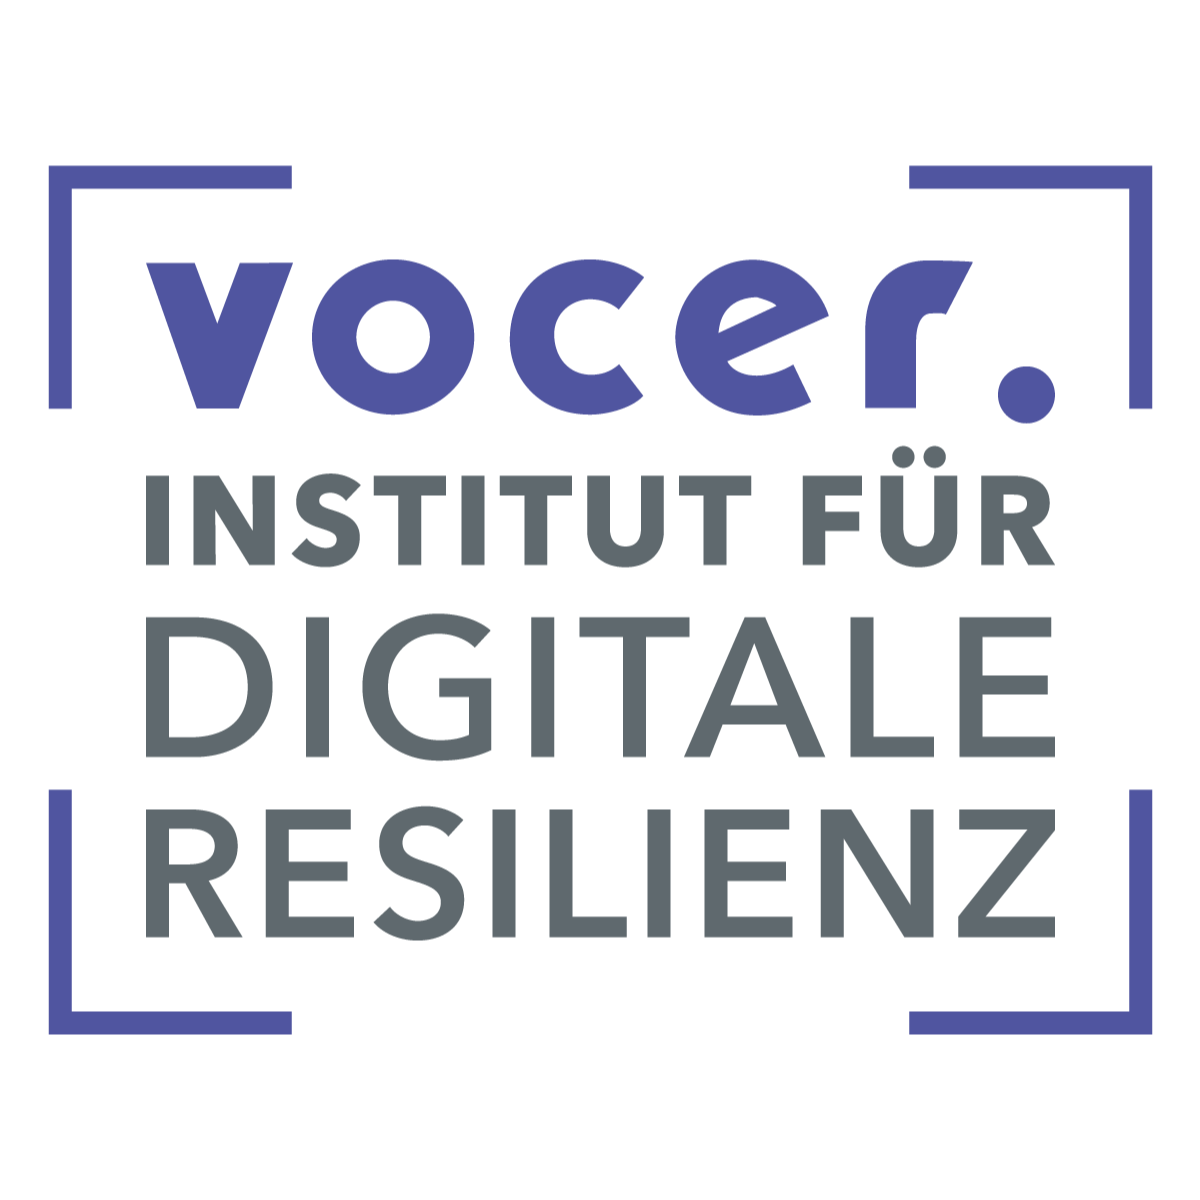 (c) Digitale-resilienz.org